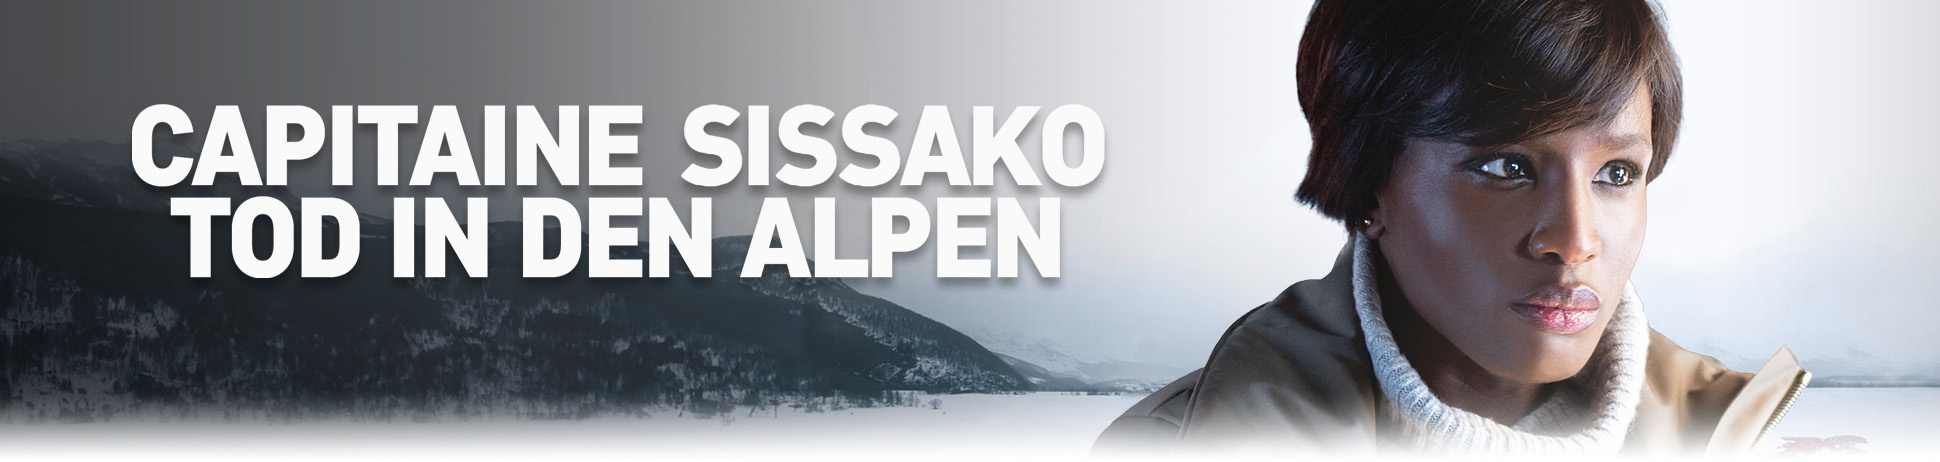 Capitaine Sissako - Tod in den Alpen